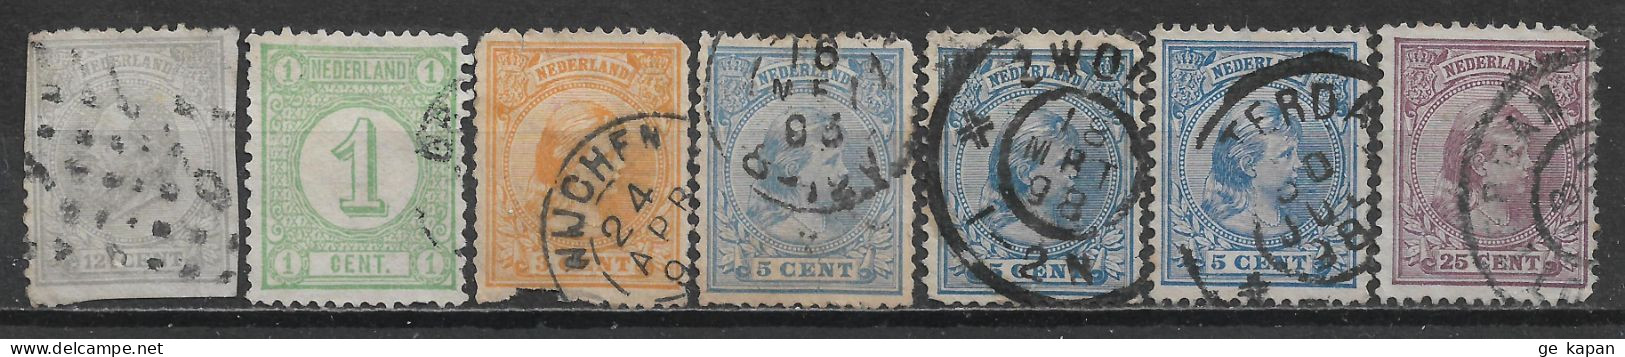 1875-1894 NETHERLANDS Set Of 7 Used Stamps (Michel # 22D,31aD,34a,35ab,35b,42b) CV €11.10 - Oblitérés